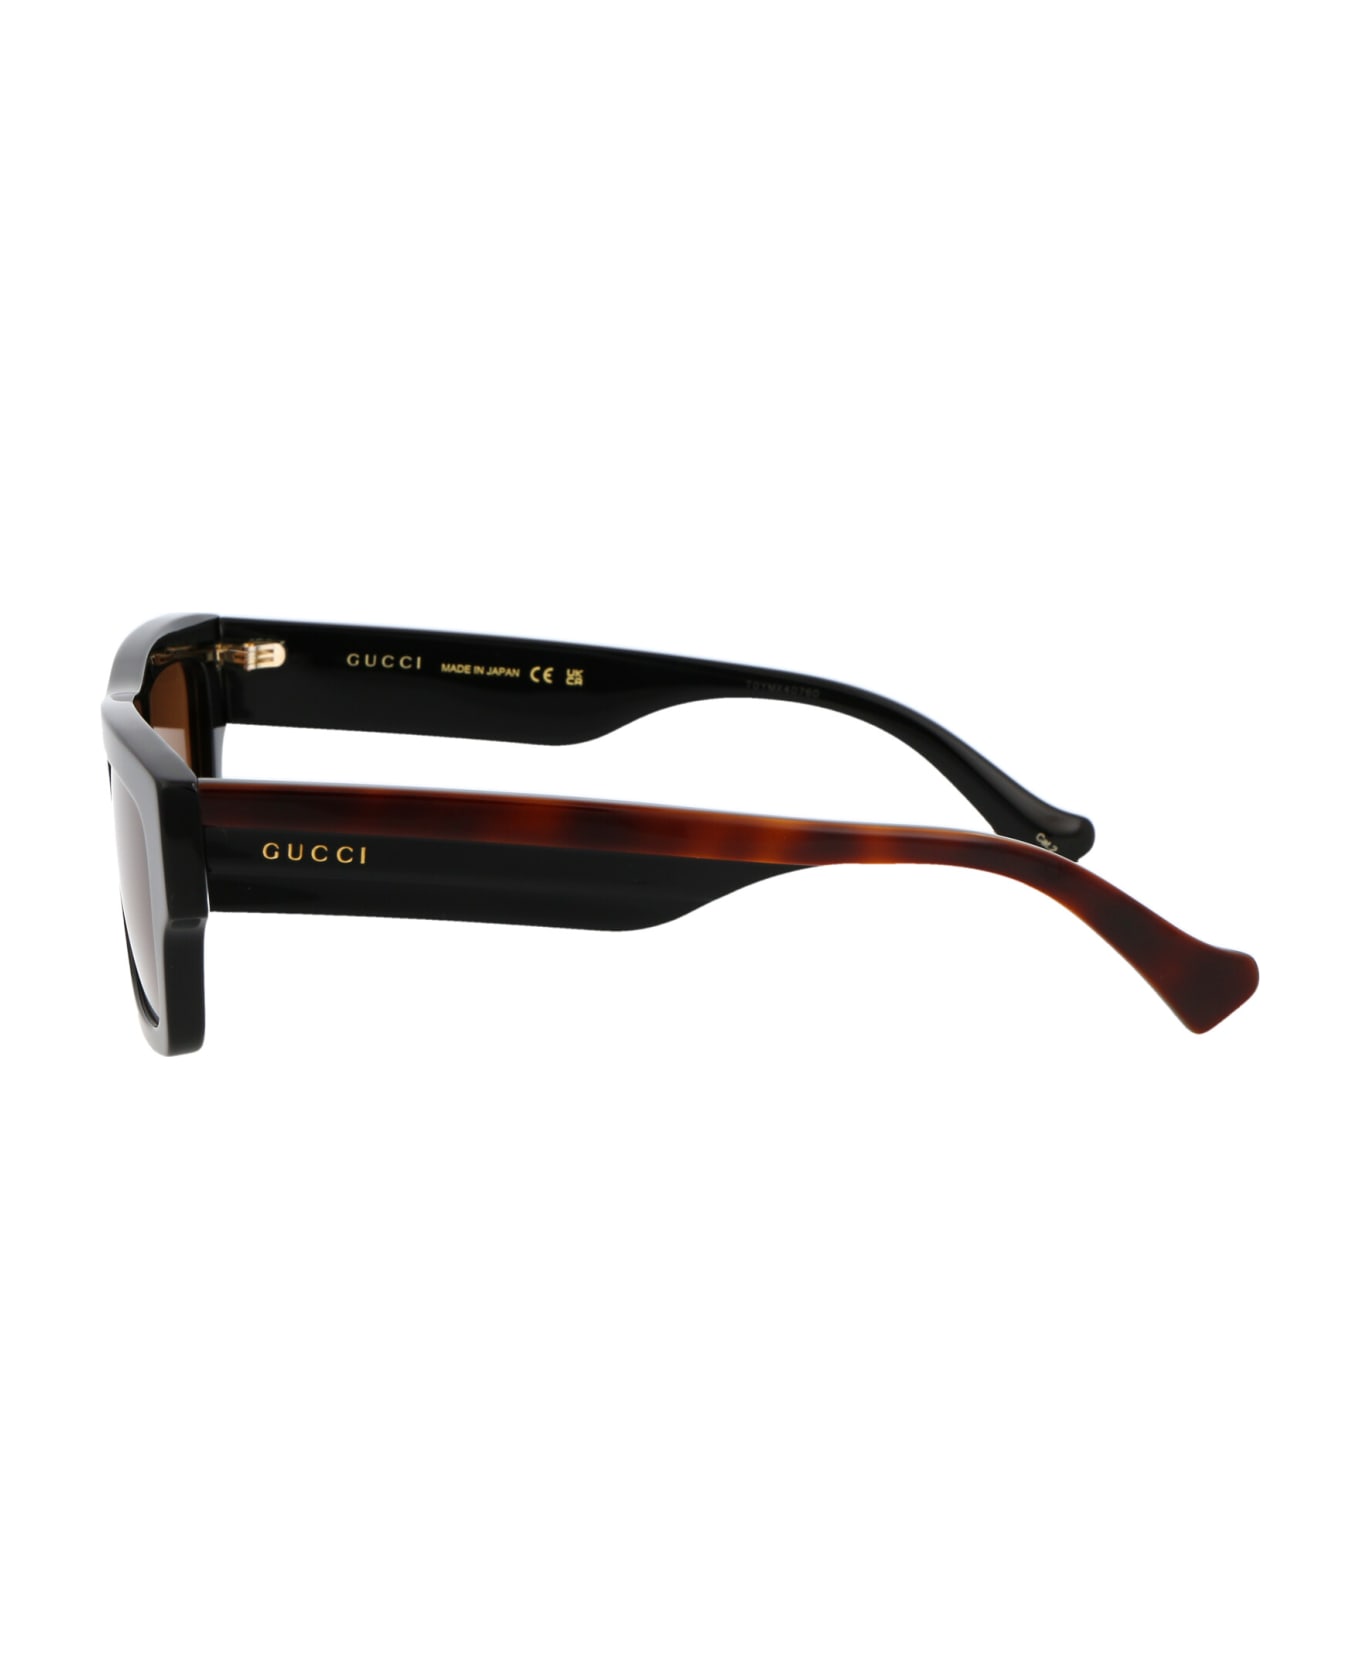 Gucci Eyewear Gg1301s Sunglasses - 004 BLACK HAVANA BROWN サングラス